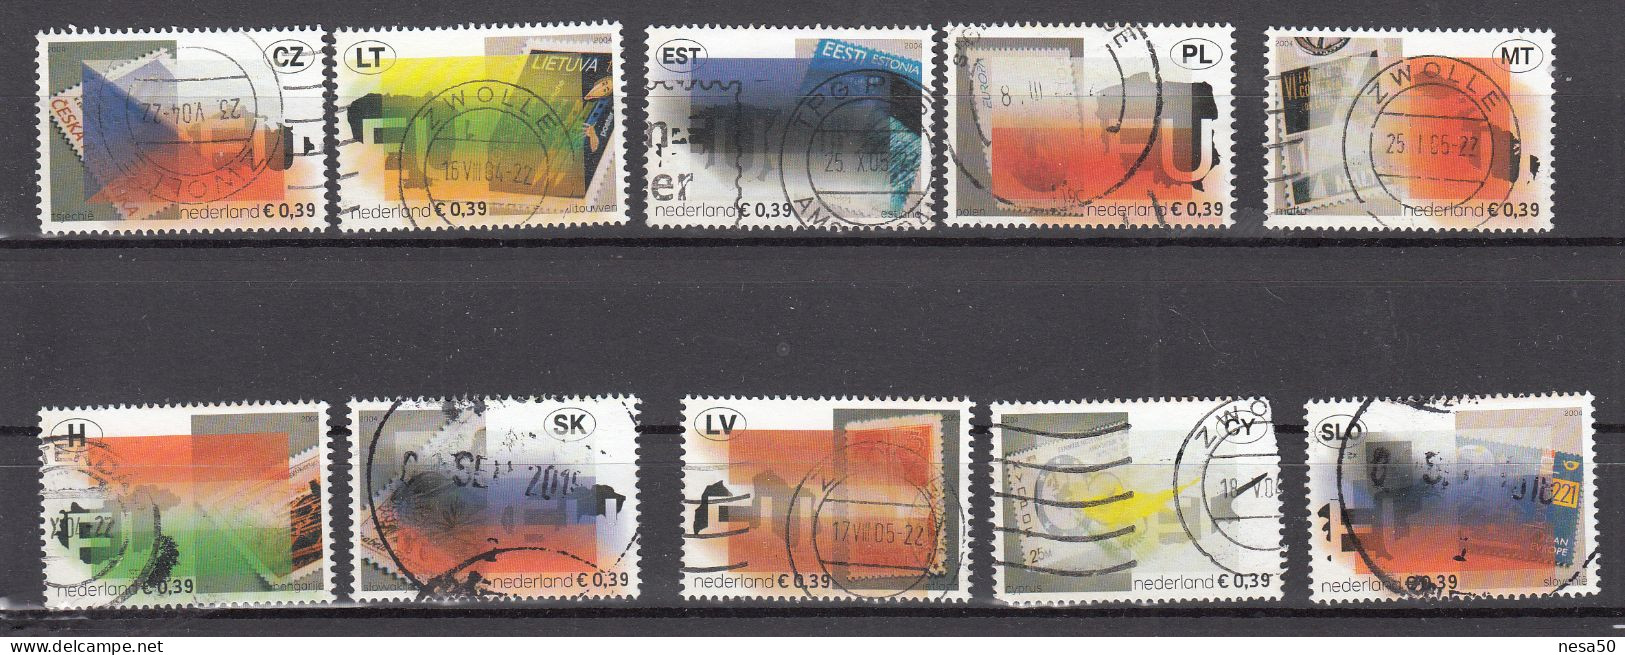 Nederland 2004 NVPH Nr 2260 - 2269 ,  Mi Nr 2205 - 2214 ; Uitbreiding Europese Unie - Used Stamps